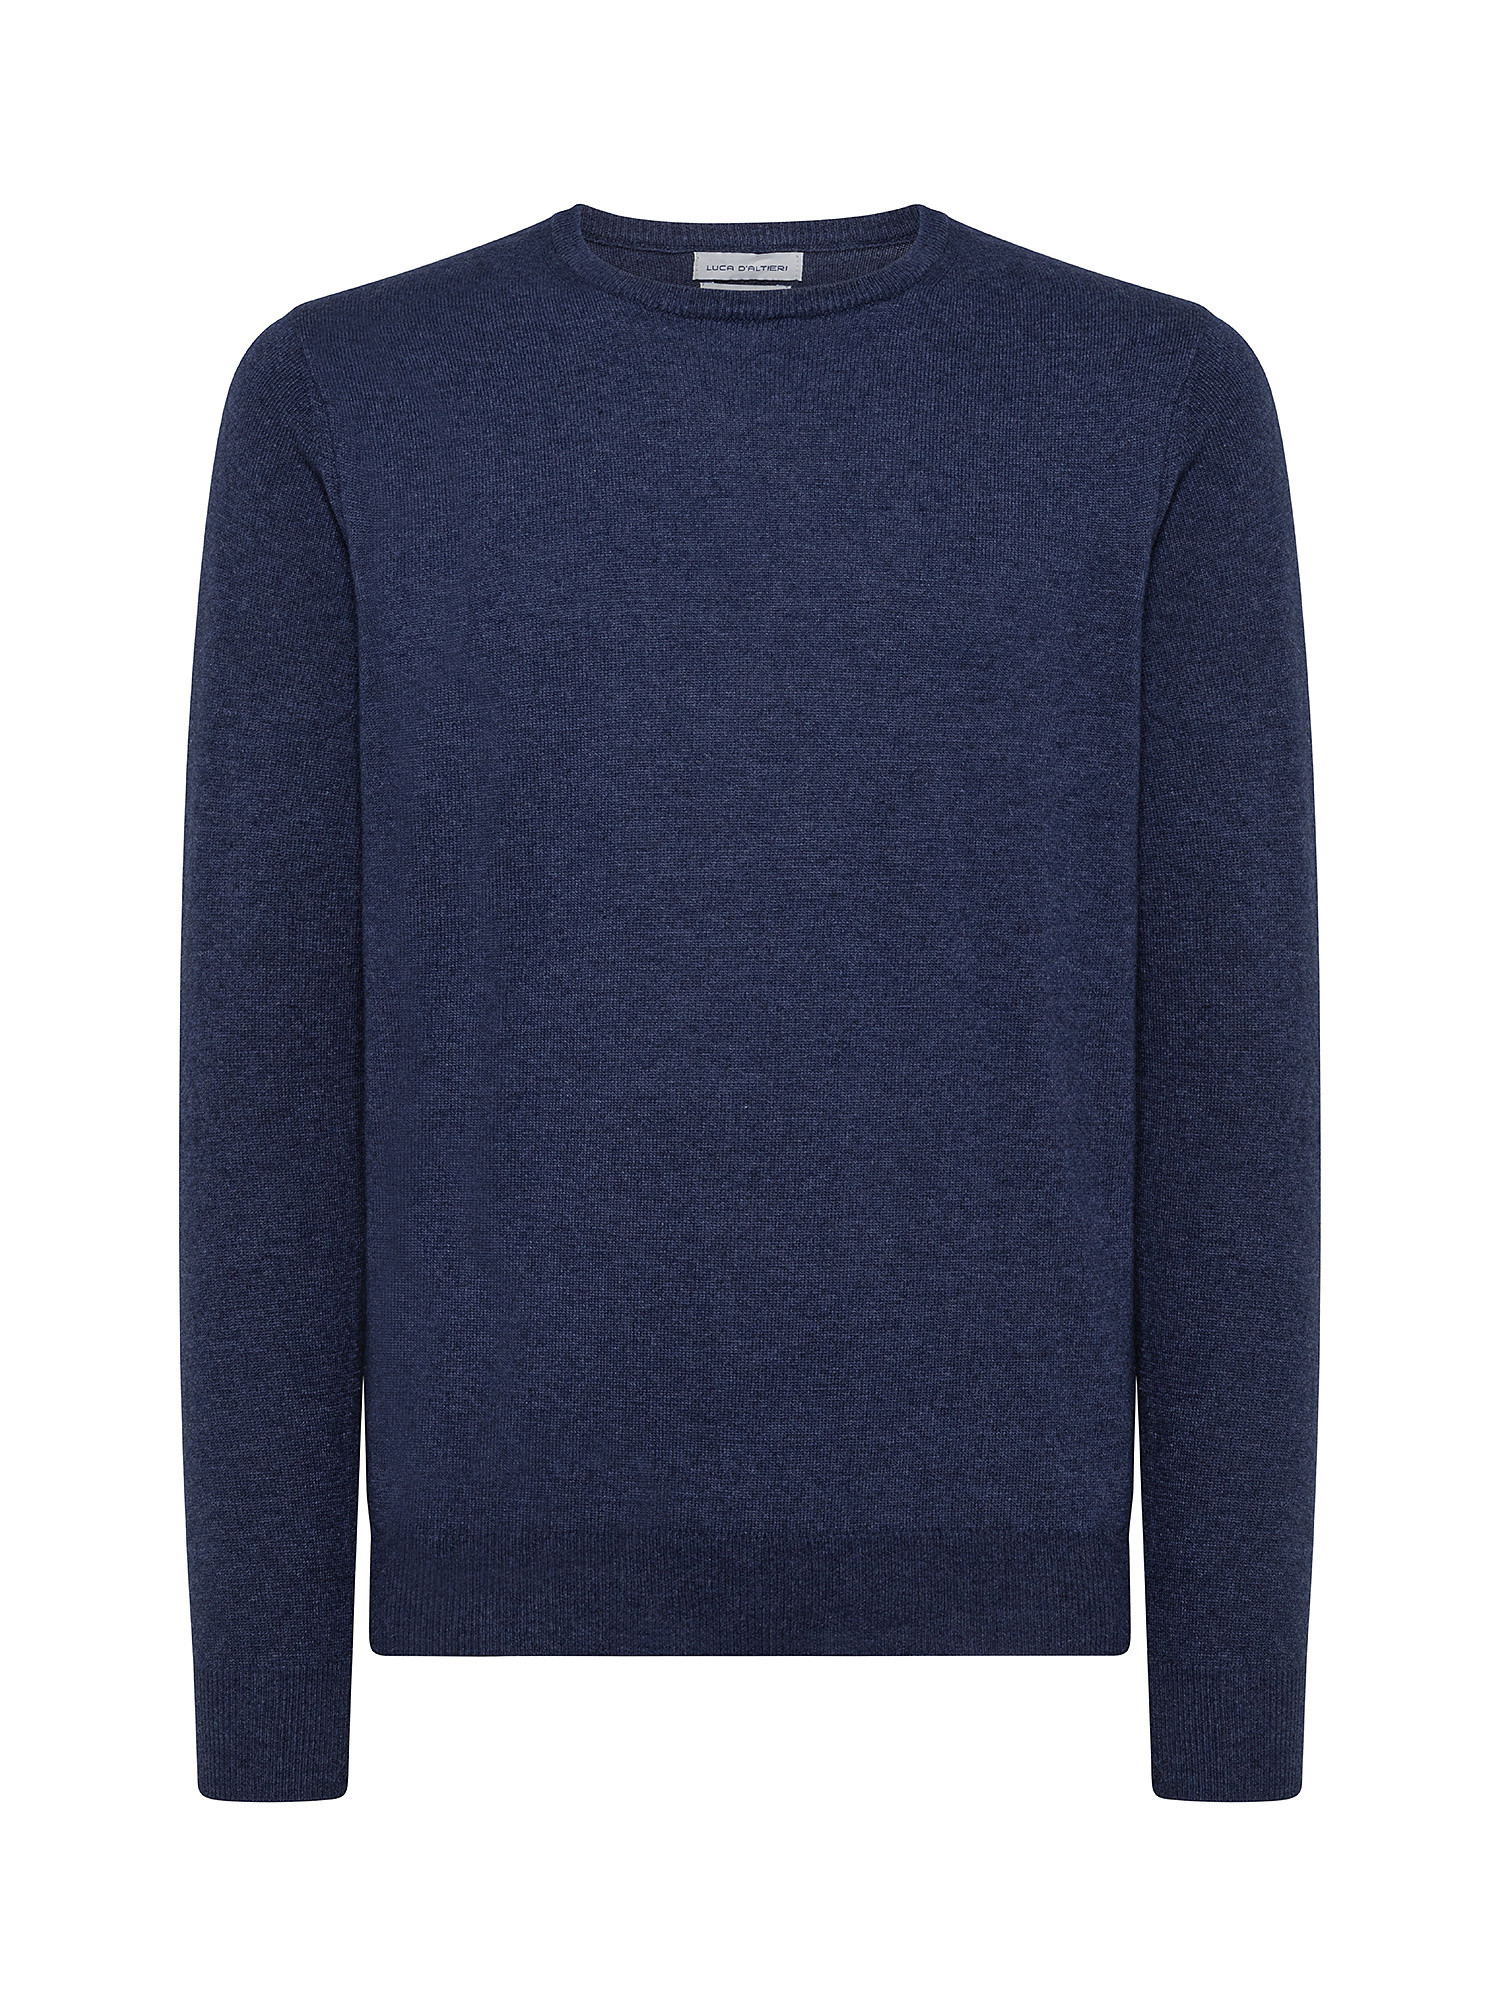 Cashmere Blend crewneck sweater with noble fibers, Denim, large image number 0